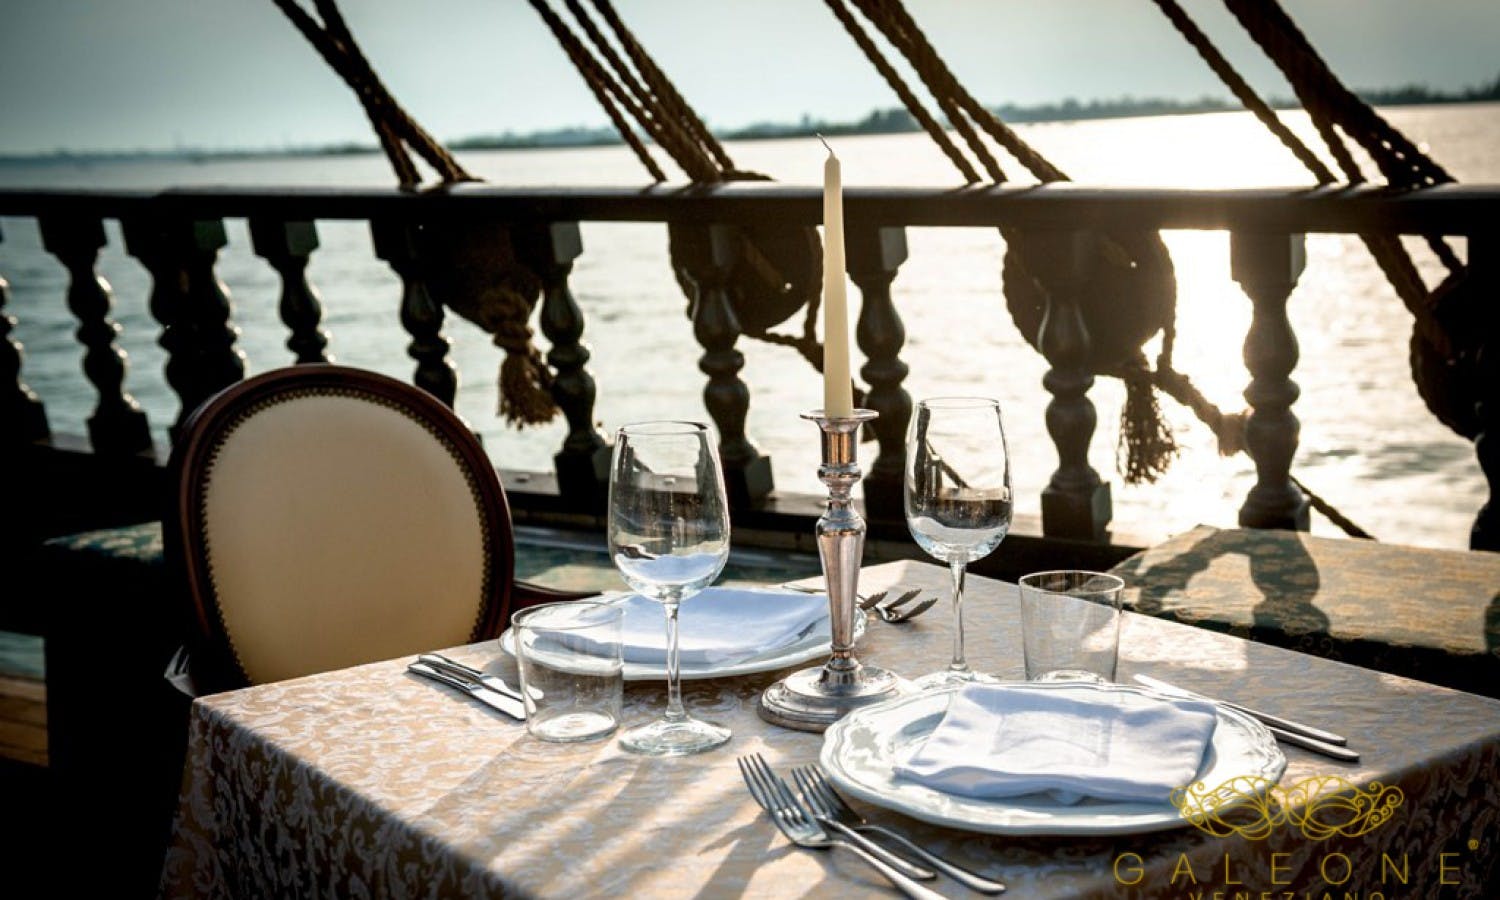 Galleon Dinner Cruise in Venice